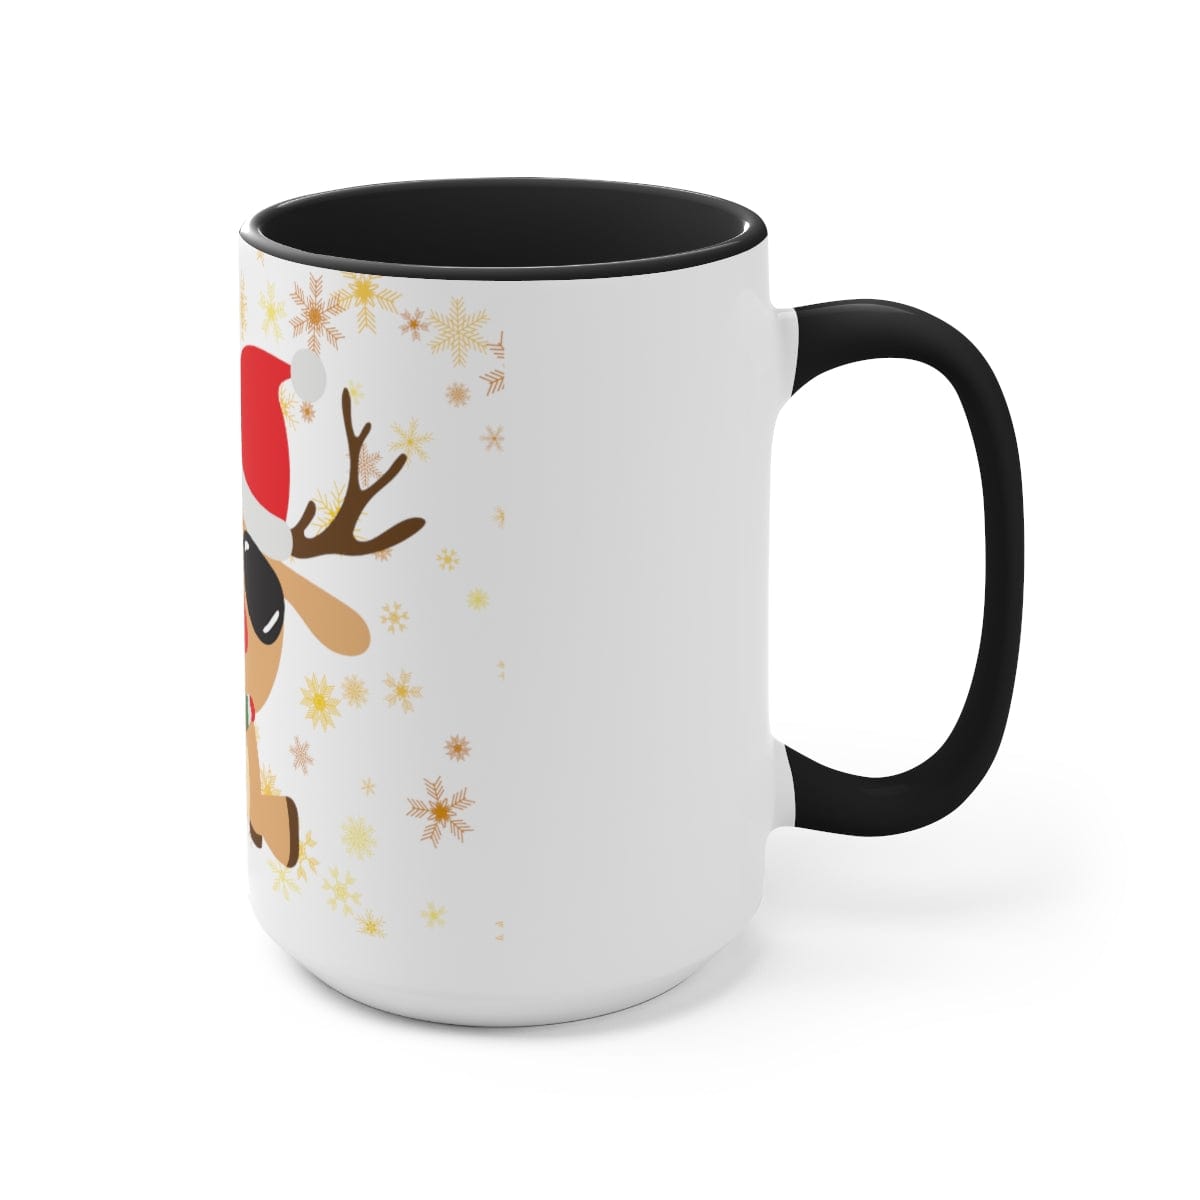 Cute Deer Coffee Mug, Home Decor, Christmas Family Gift 15 oz Two-Tone Coffee Mugs